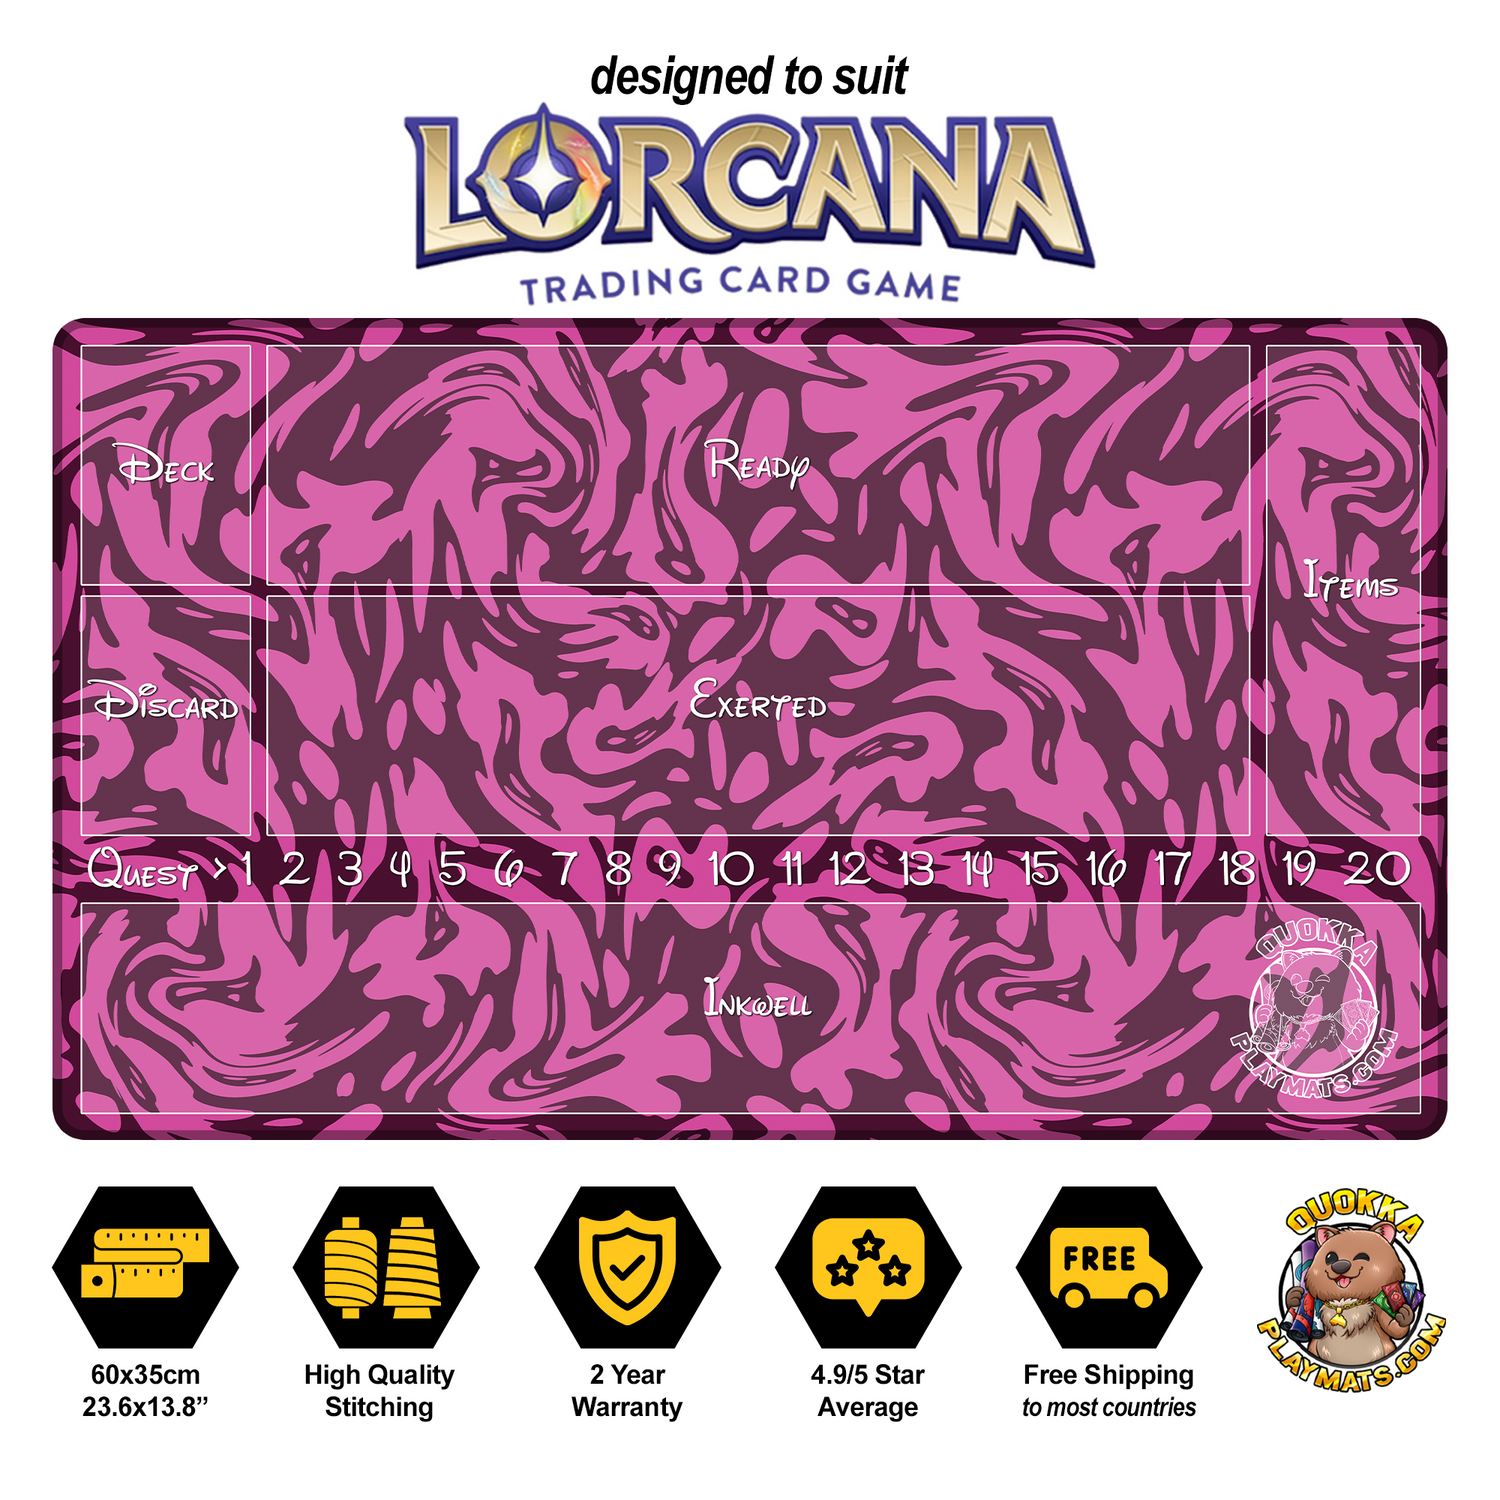 TCG Playmats - Designed to suit Lorcana